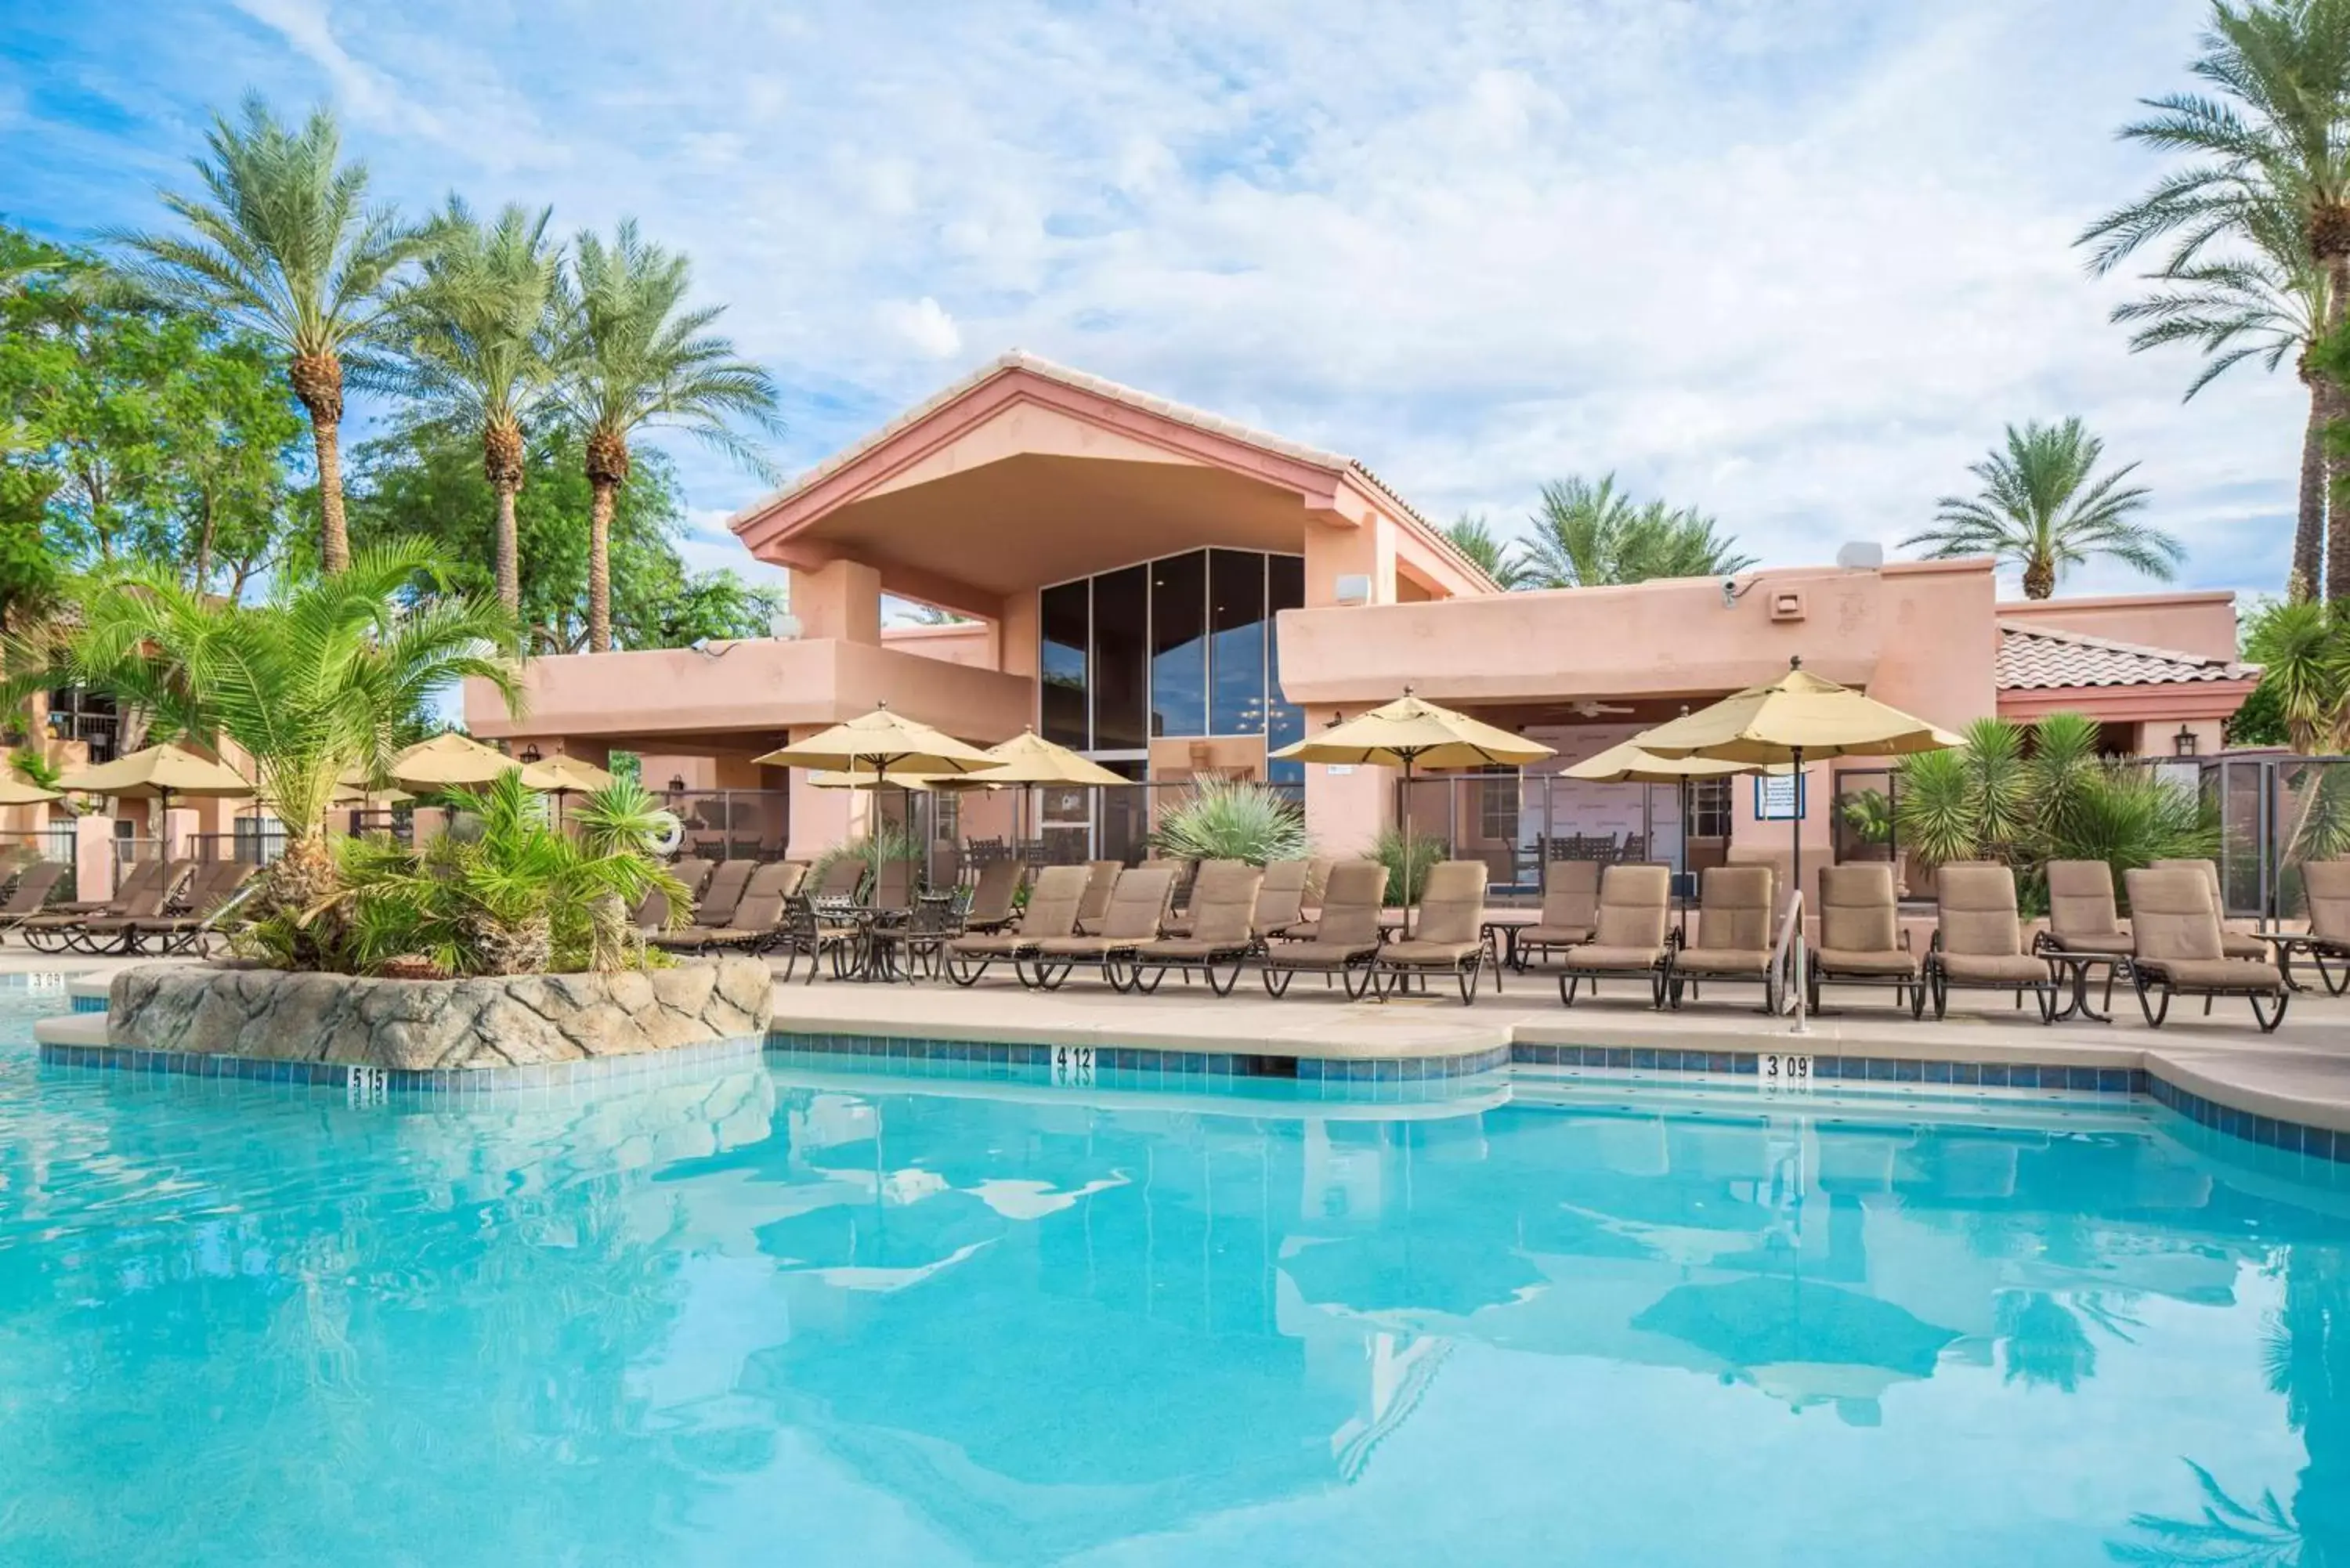 Swimming Pool in Hilton Vacation Club Scottsdale Villa Mirage